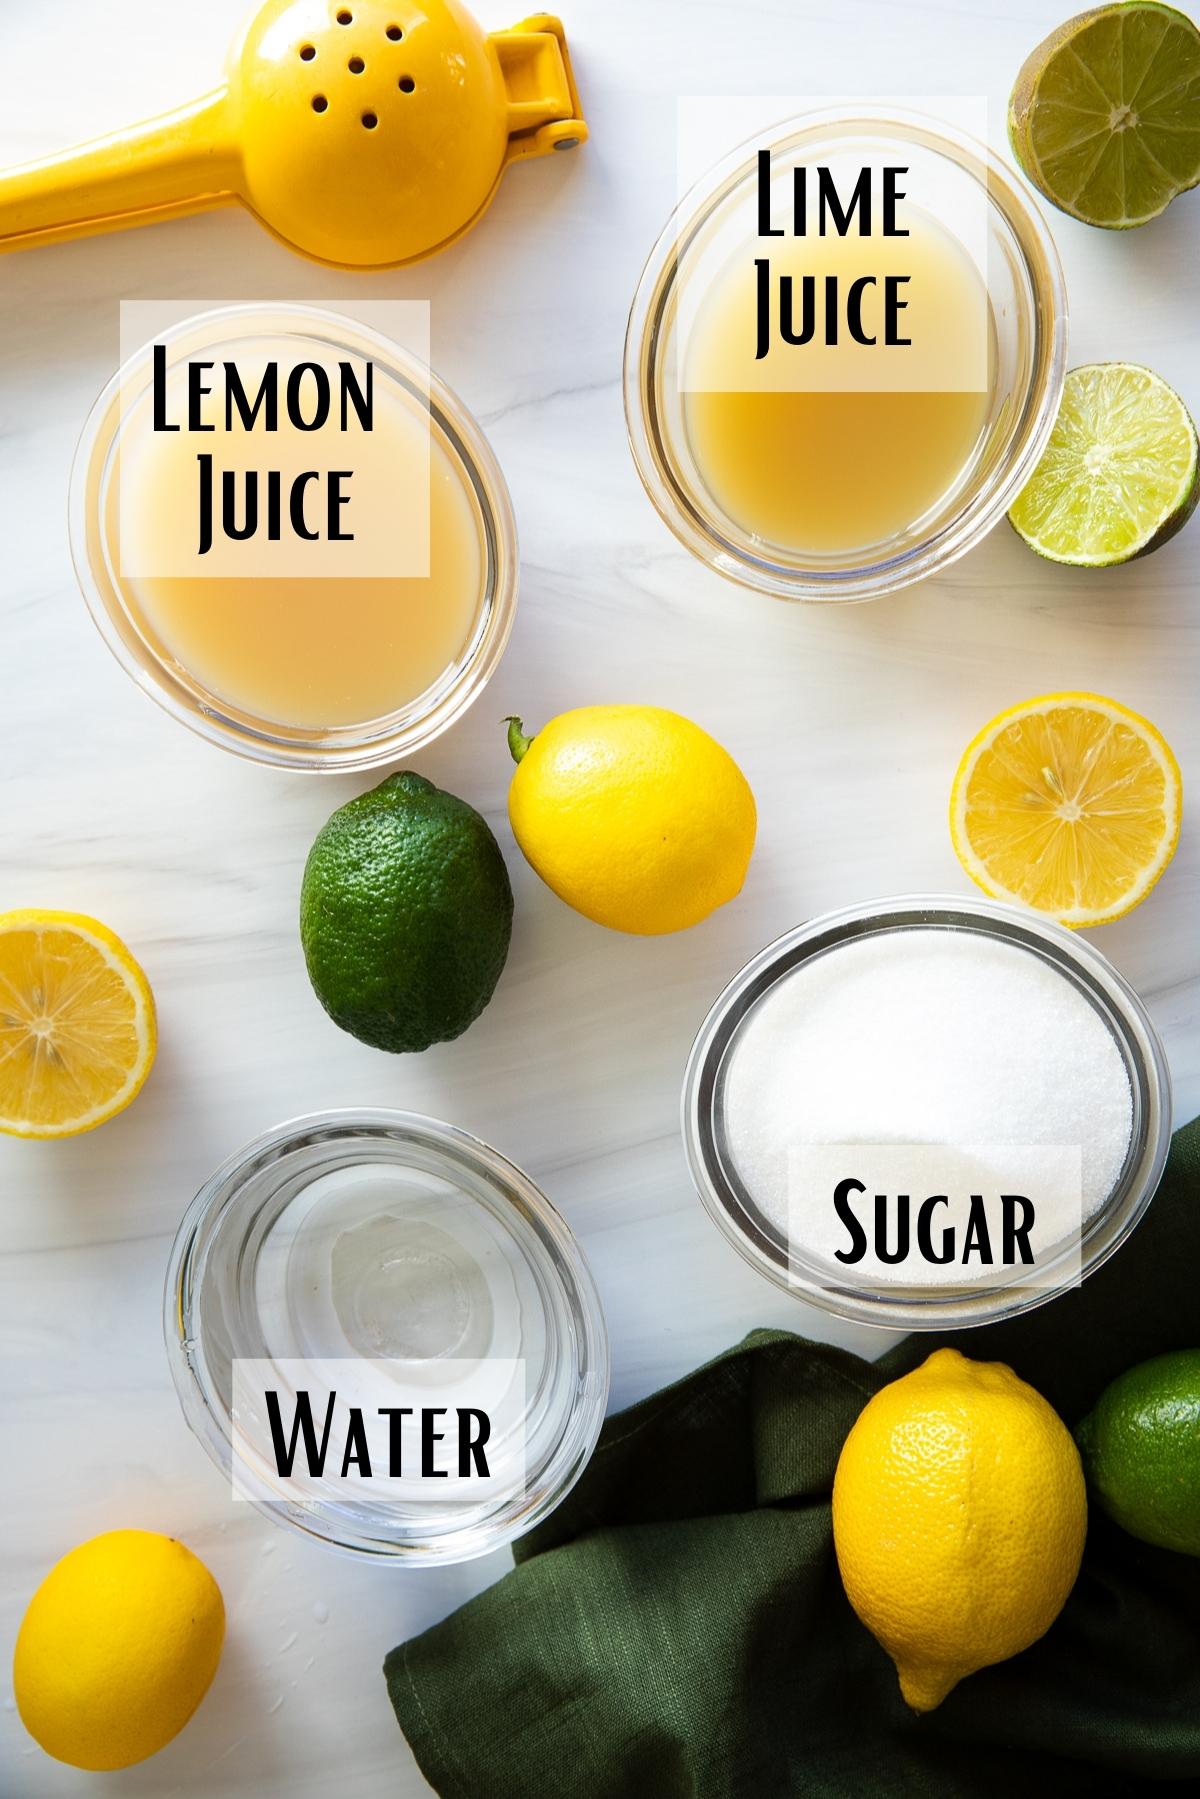 sour mix ingredients of lemon juice, lime juice, water, and sugar